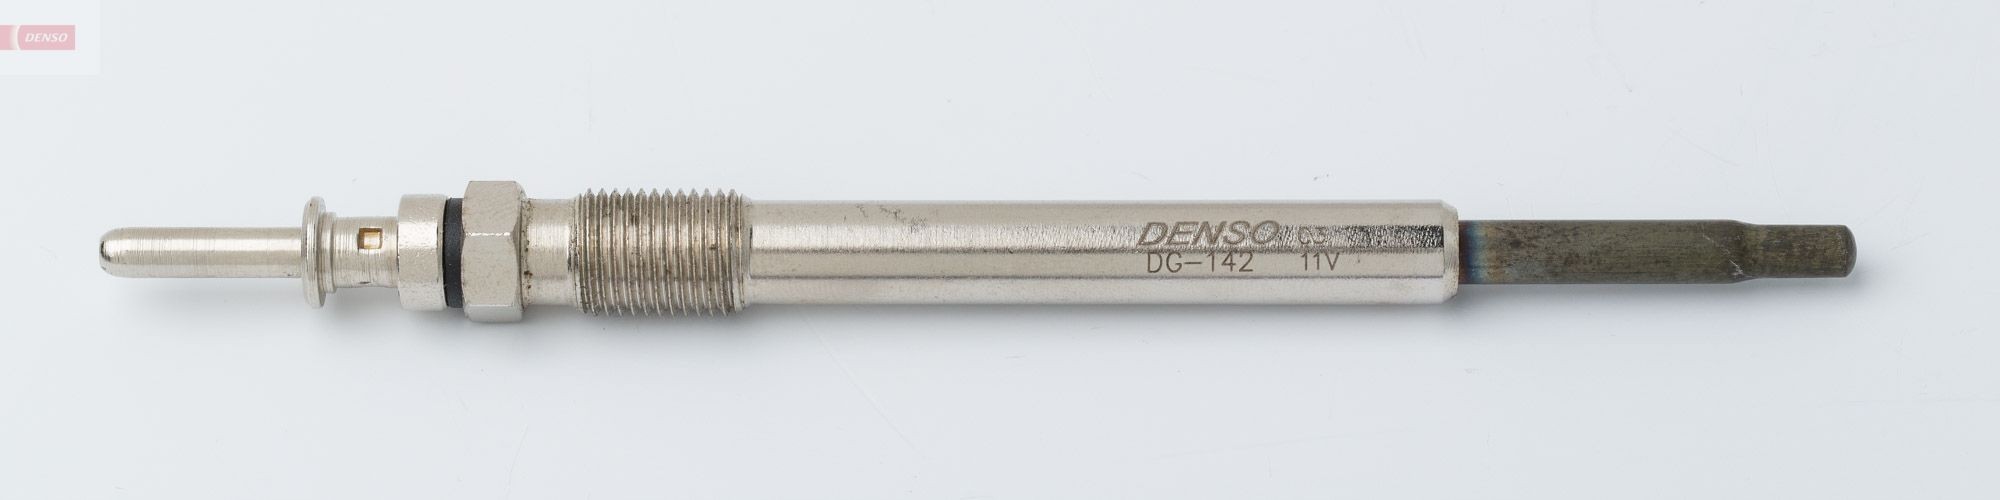 DENSO DG-142 Glow plug 12 14 305